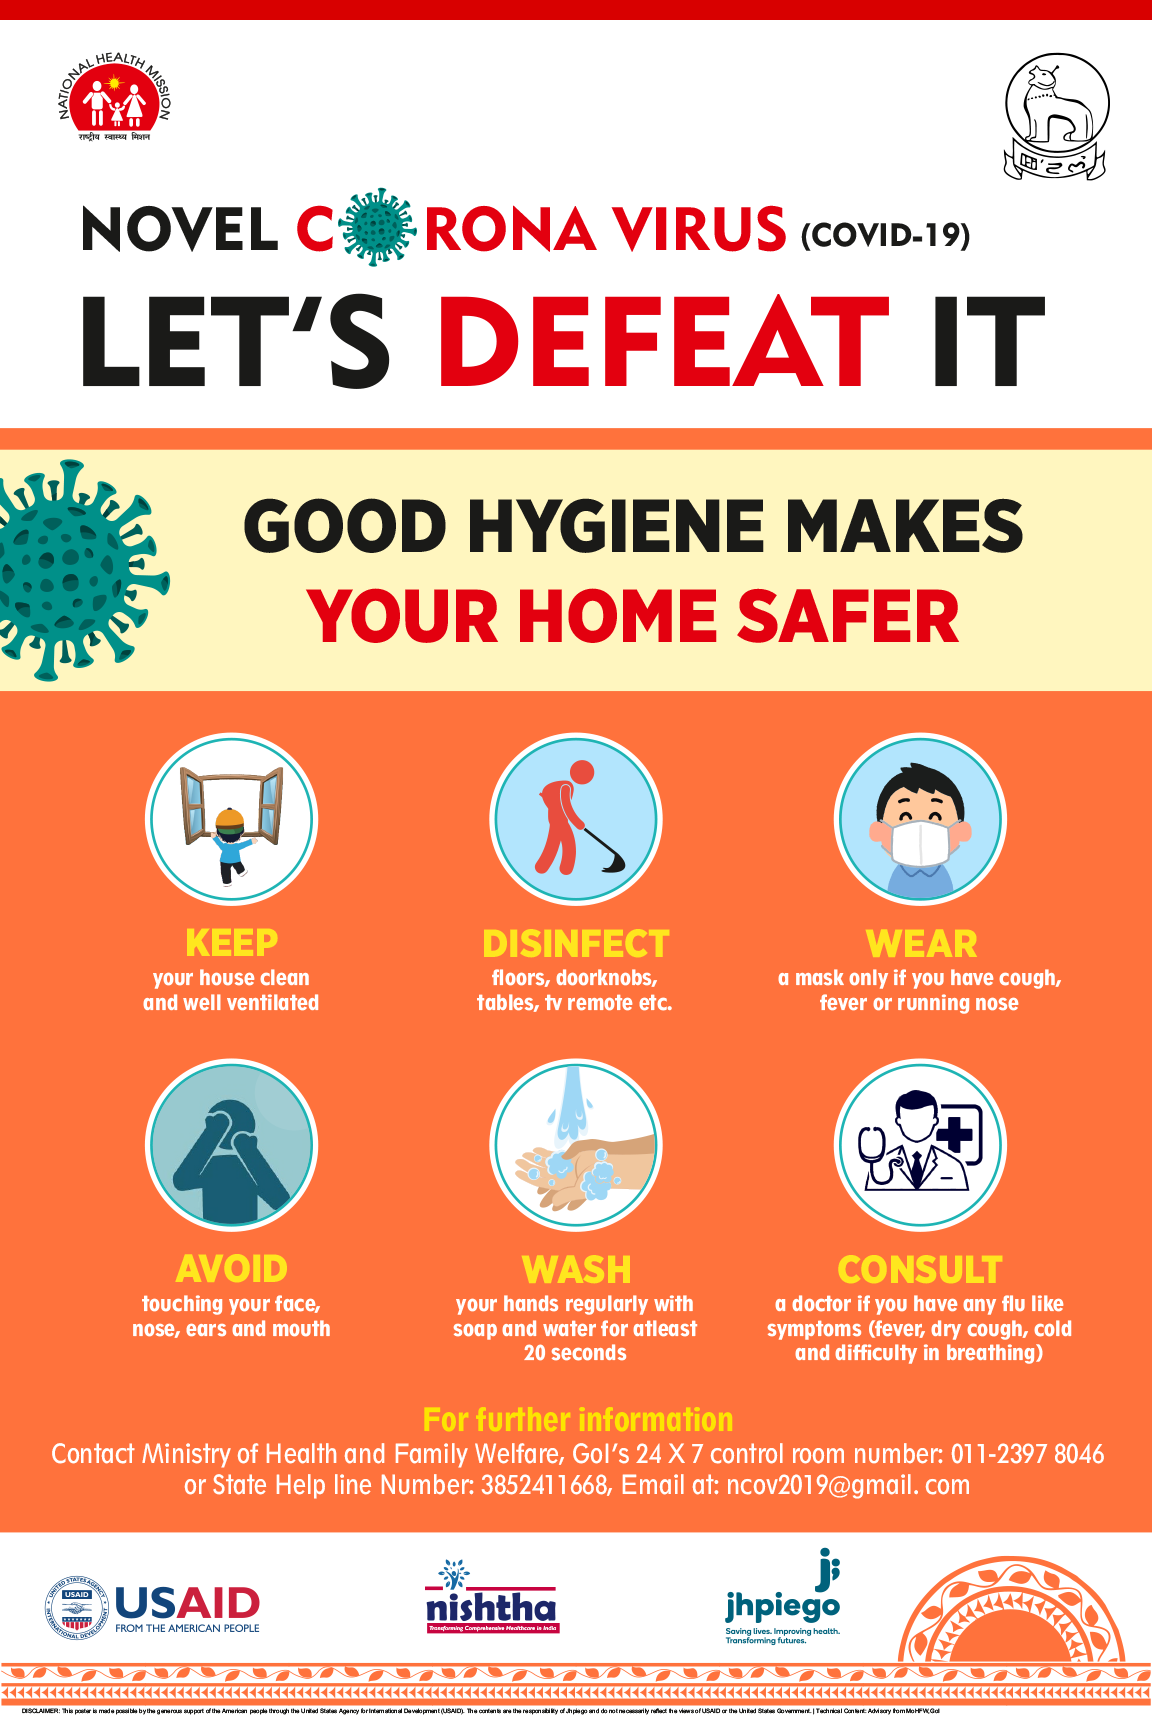 Good Hygiene Makes Your Home Safer. 